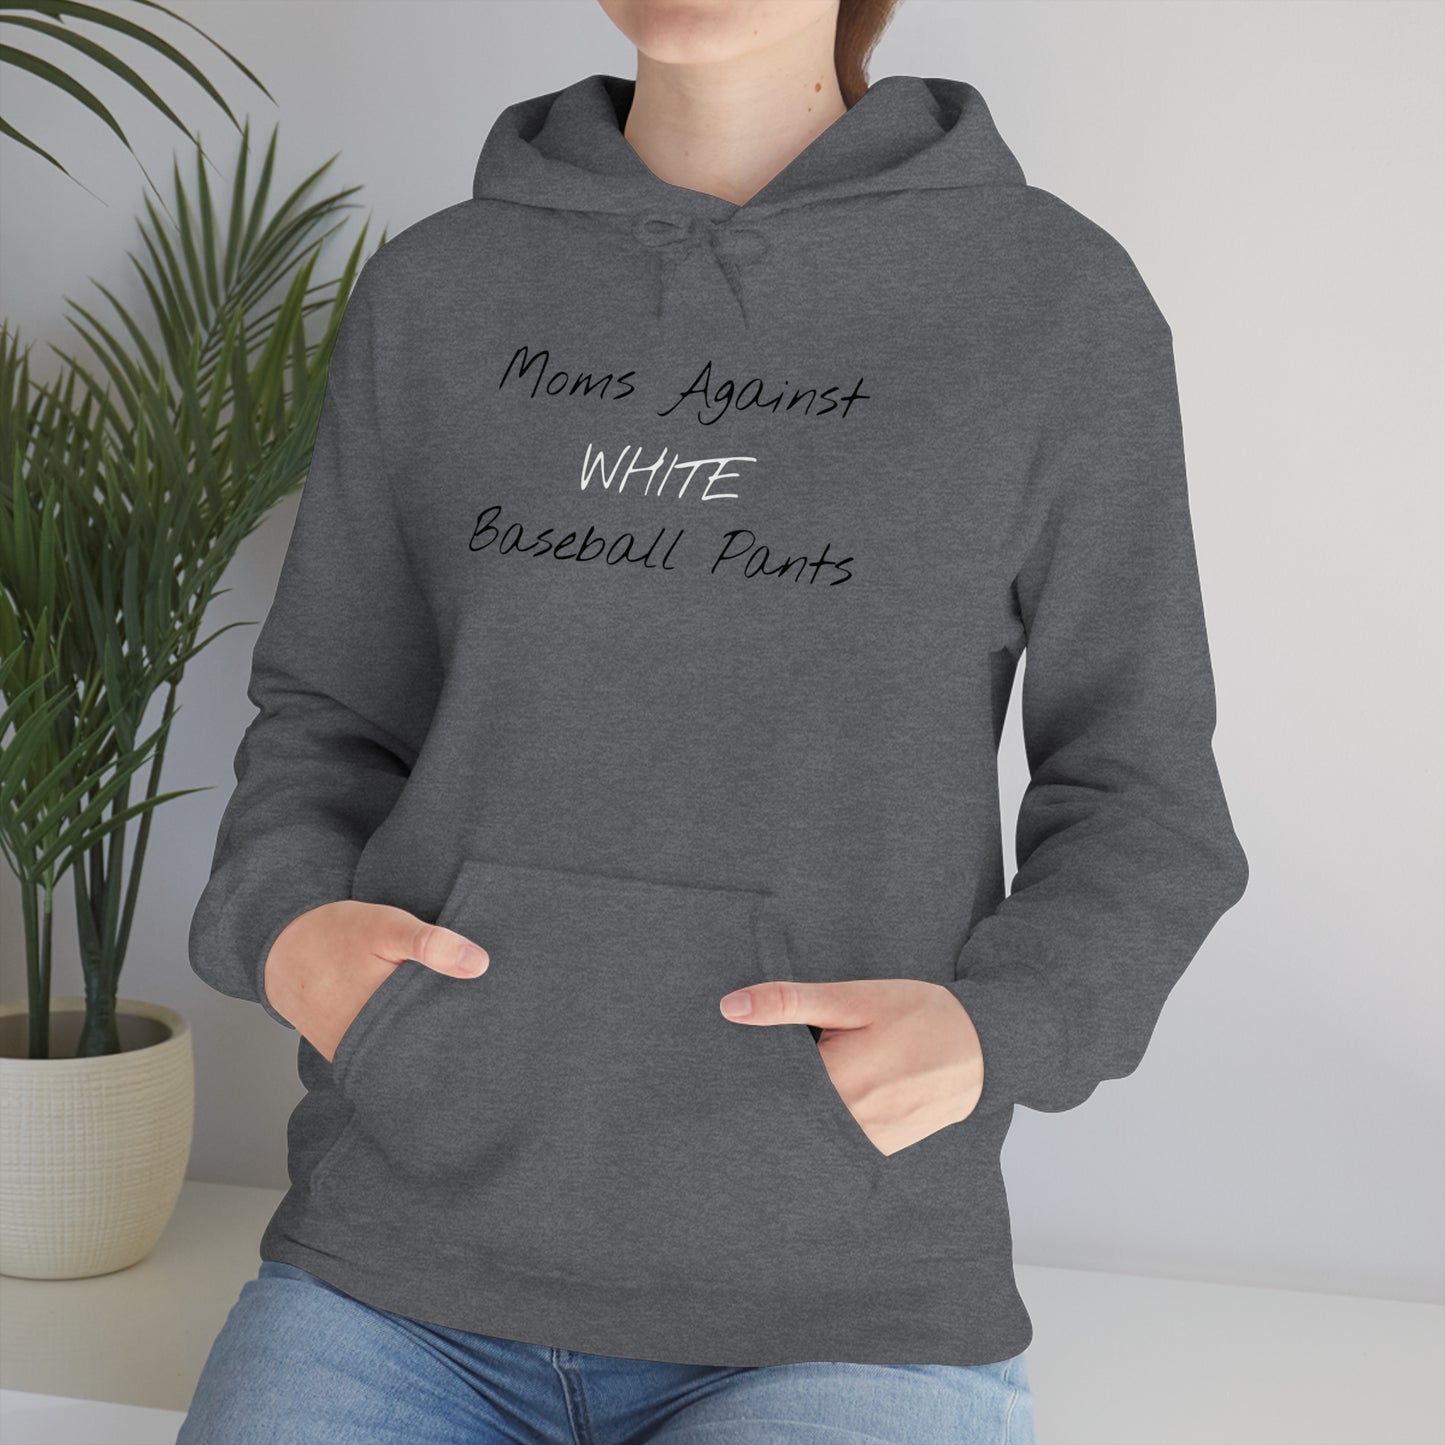 "Moms Against White Baseball Pants" Hooded Sweatshirt